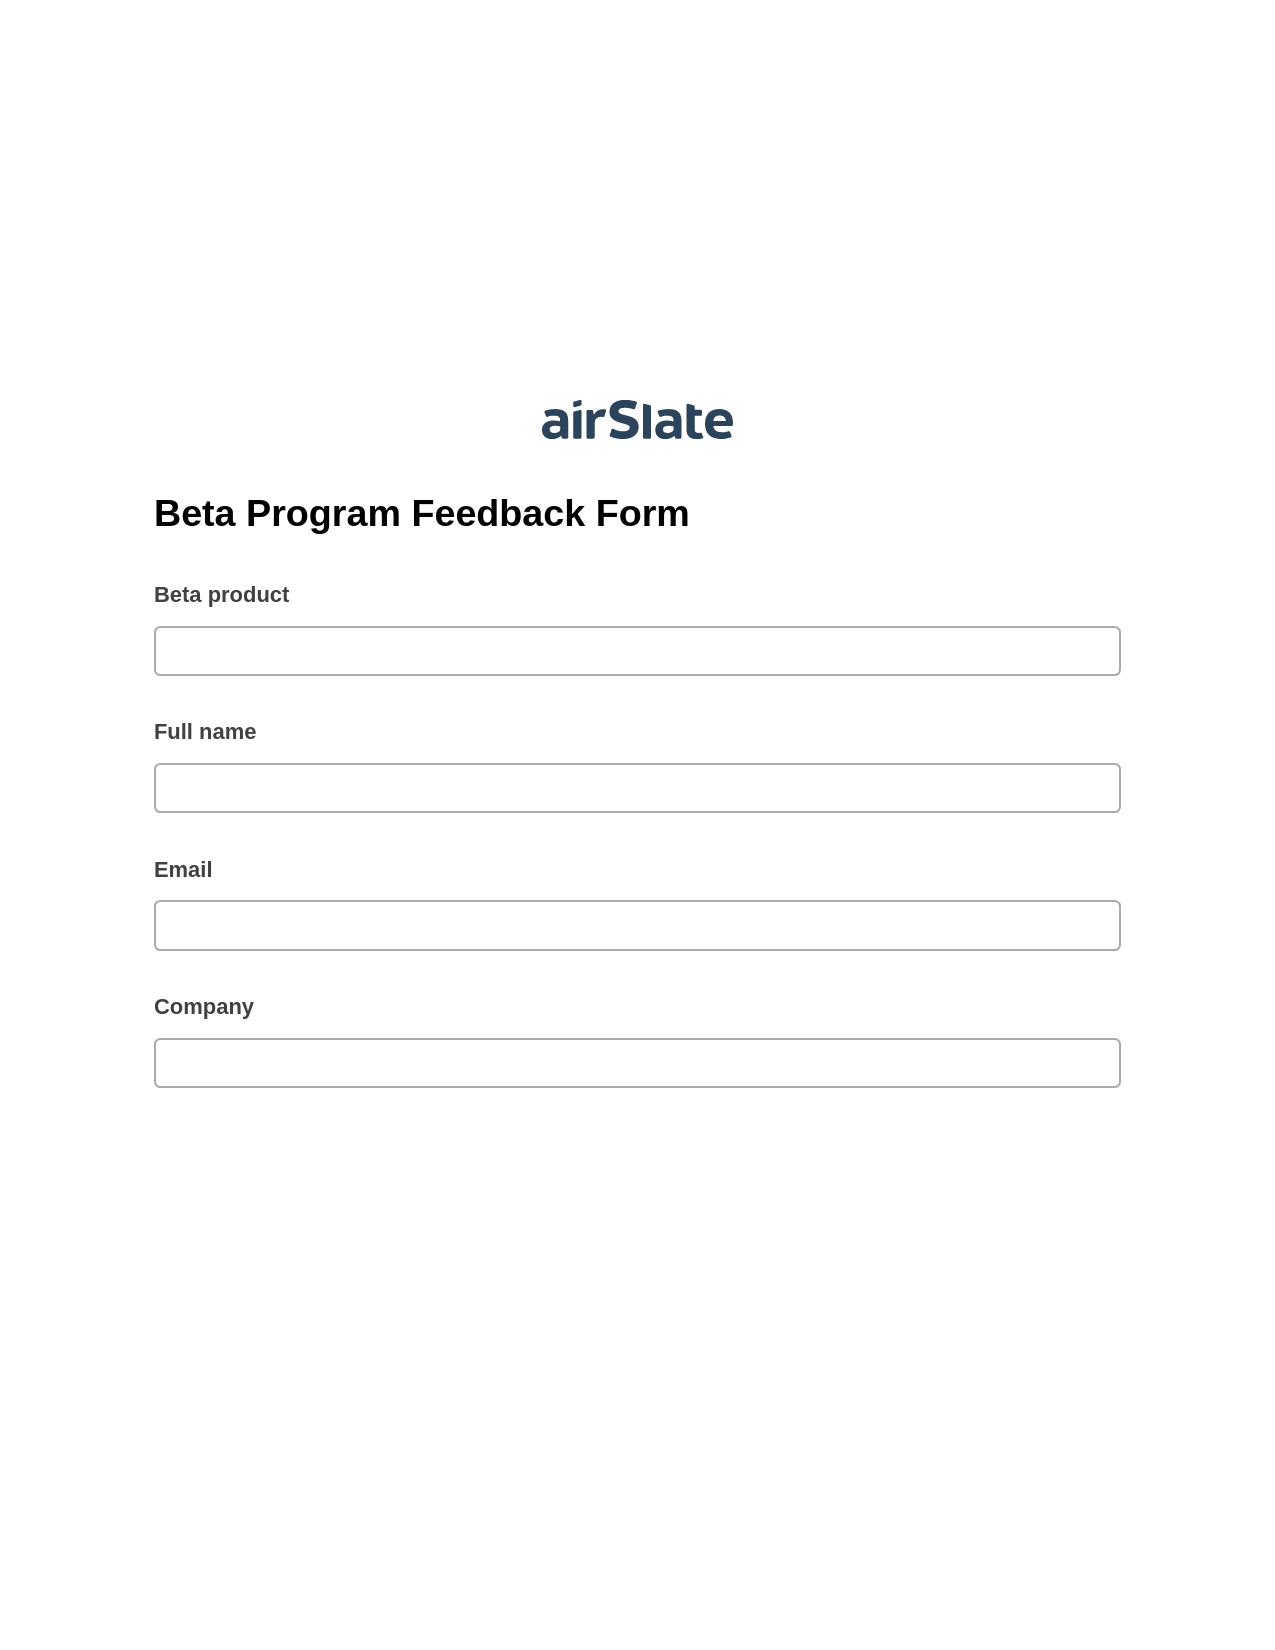 Multirole Beta Program Feedback Form Pre-fill from Salesforce Record Bot, Lock the slate bot, Archive to SharePoint Folder Bot